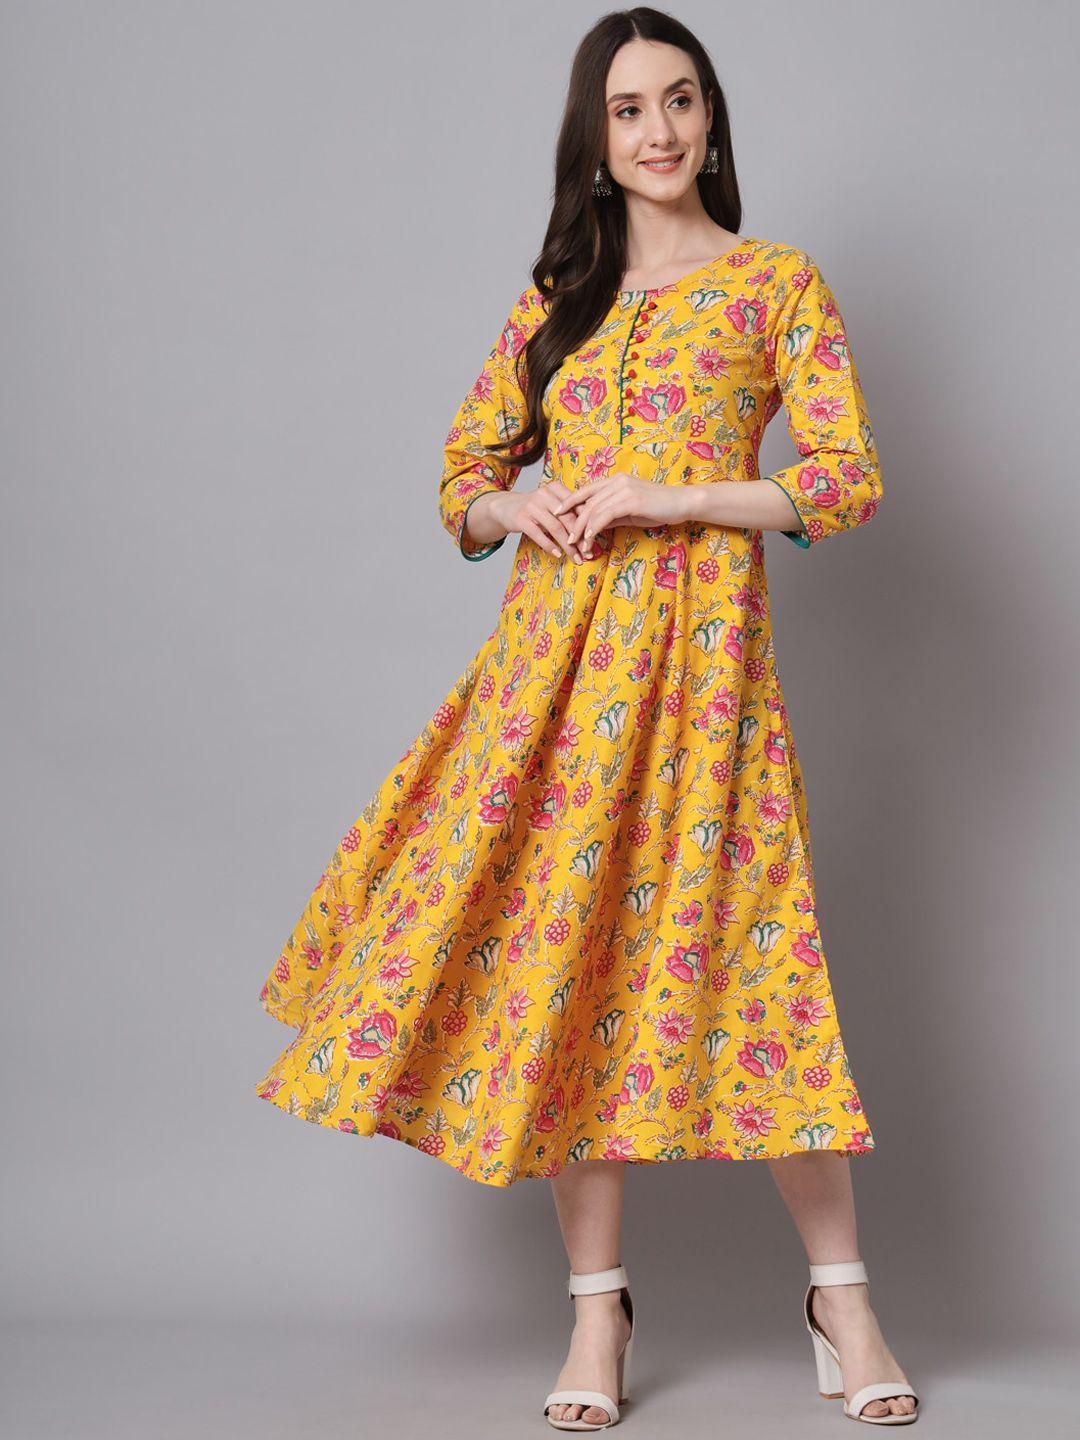 rangmayee floral printed cotton a-line ethnic dress